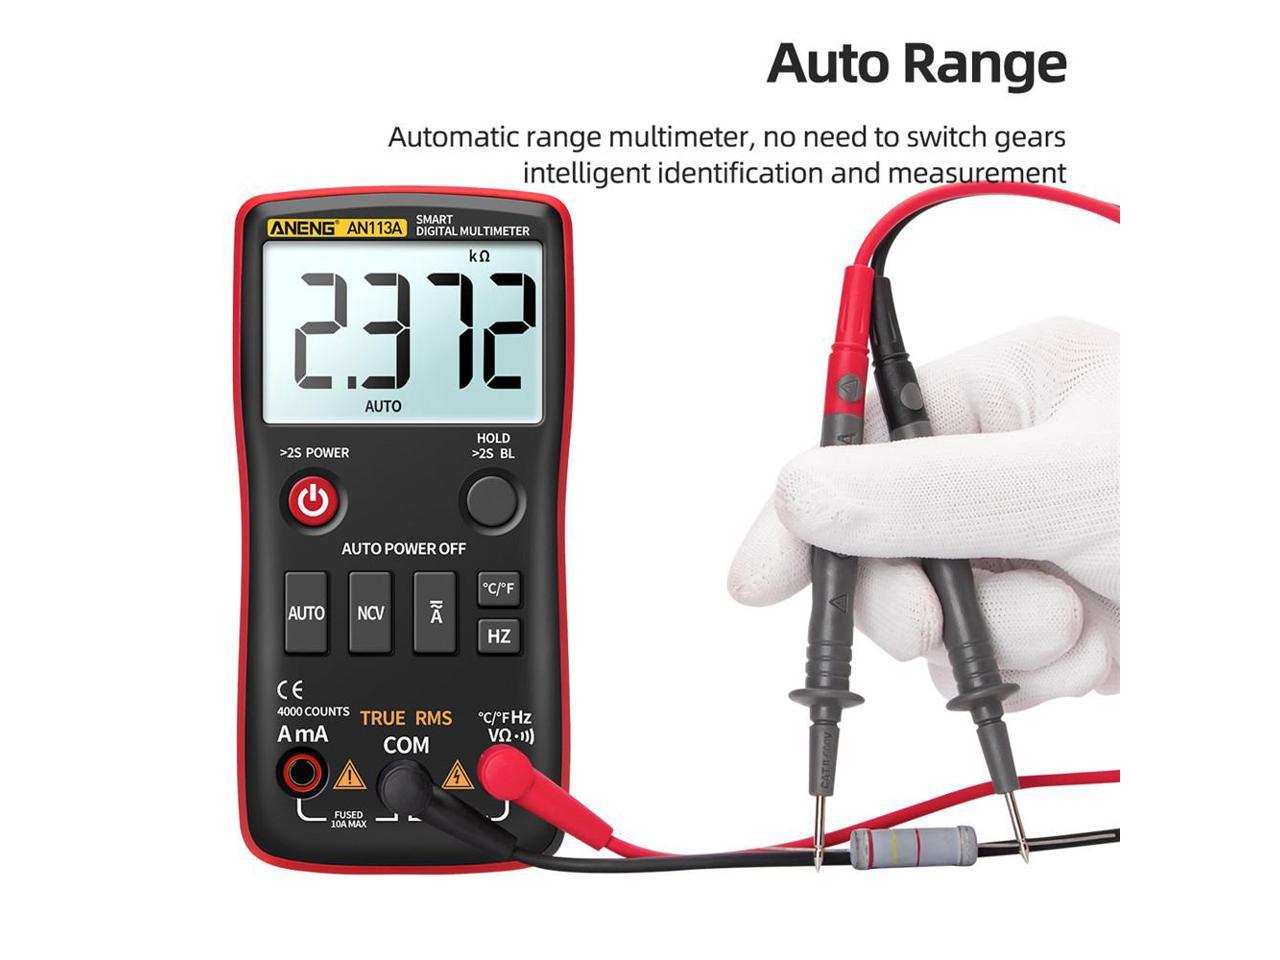 ANENG AN113A Auto Range Intelligent Digital Multimeter 4000 Count Voltmeter